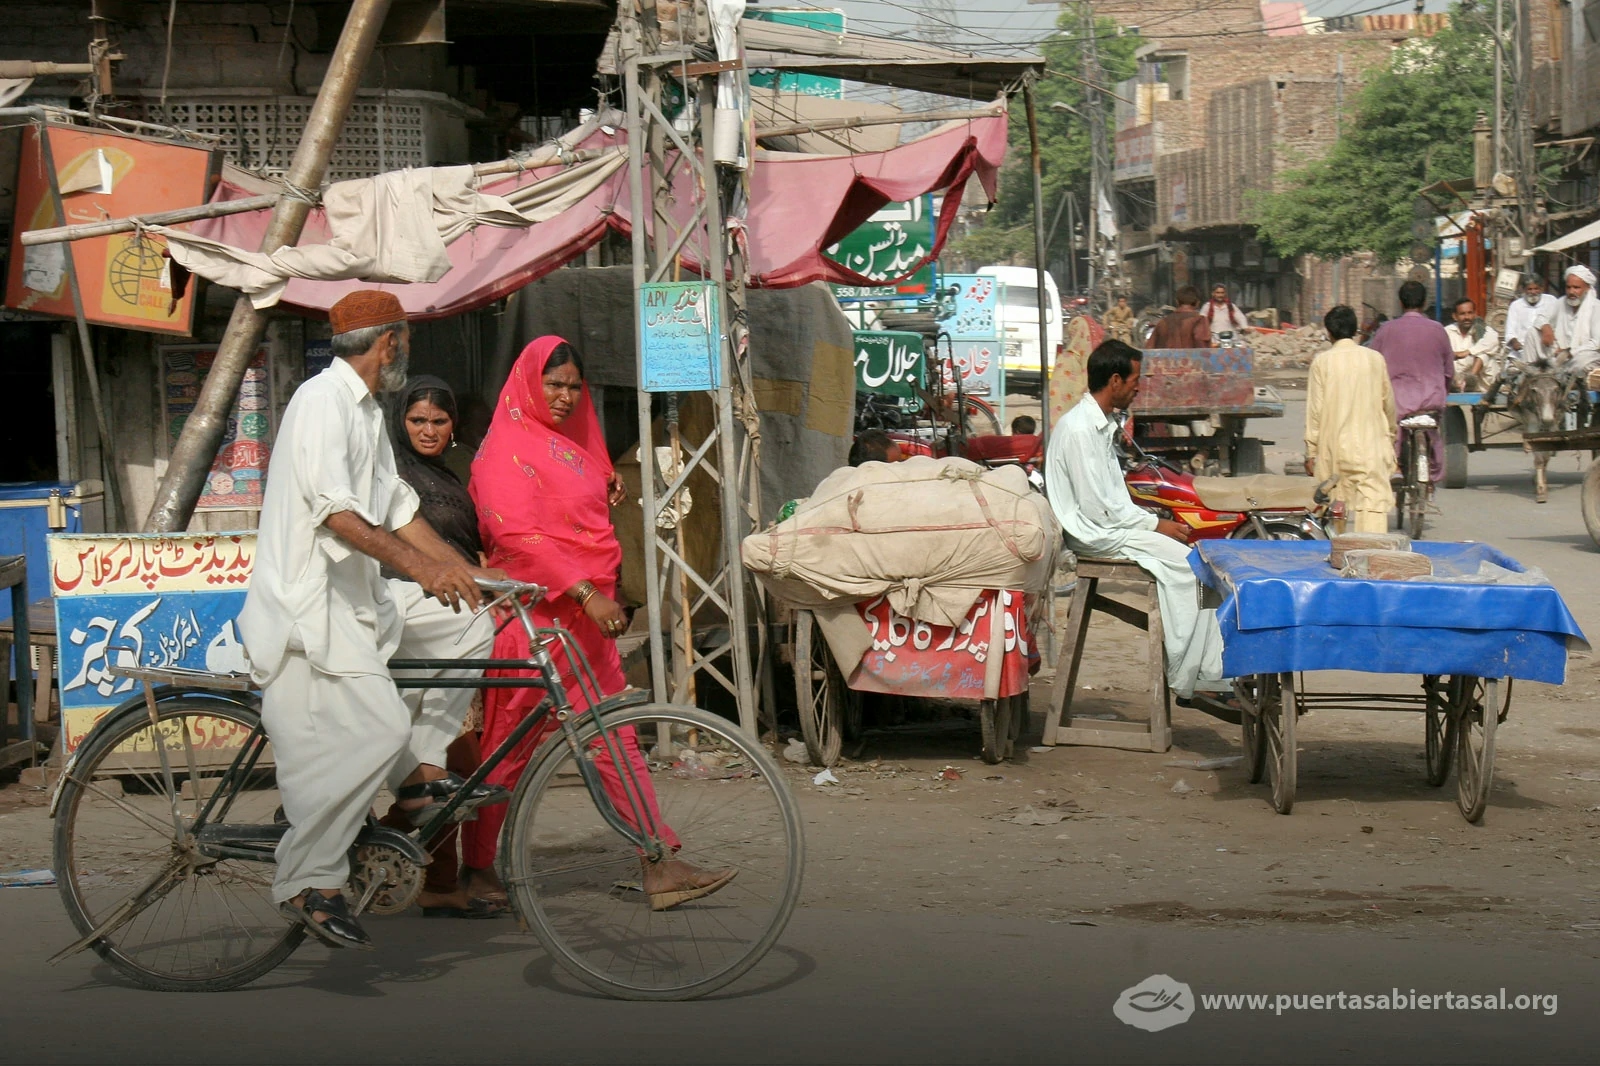 Escena urbana en Pakistán